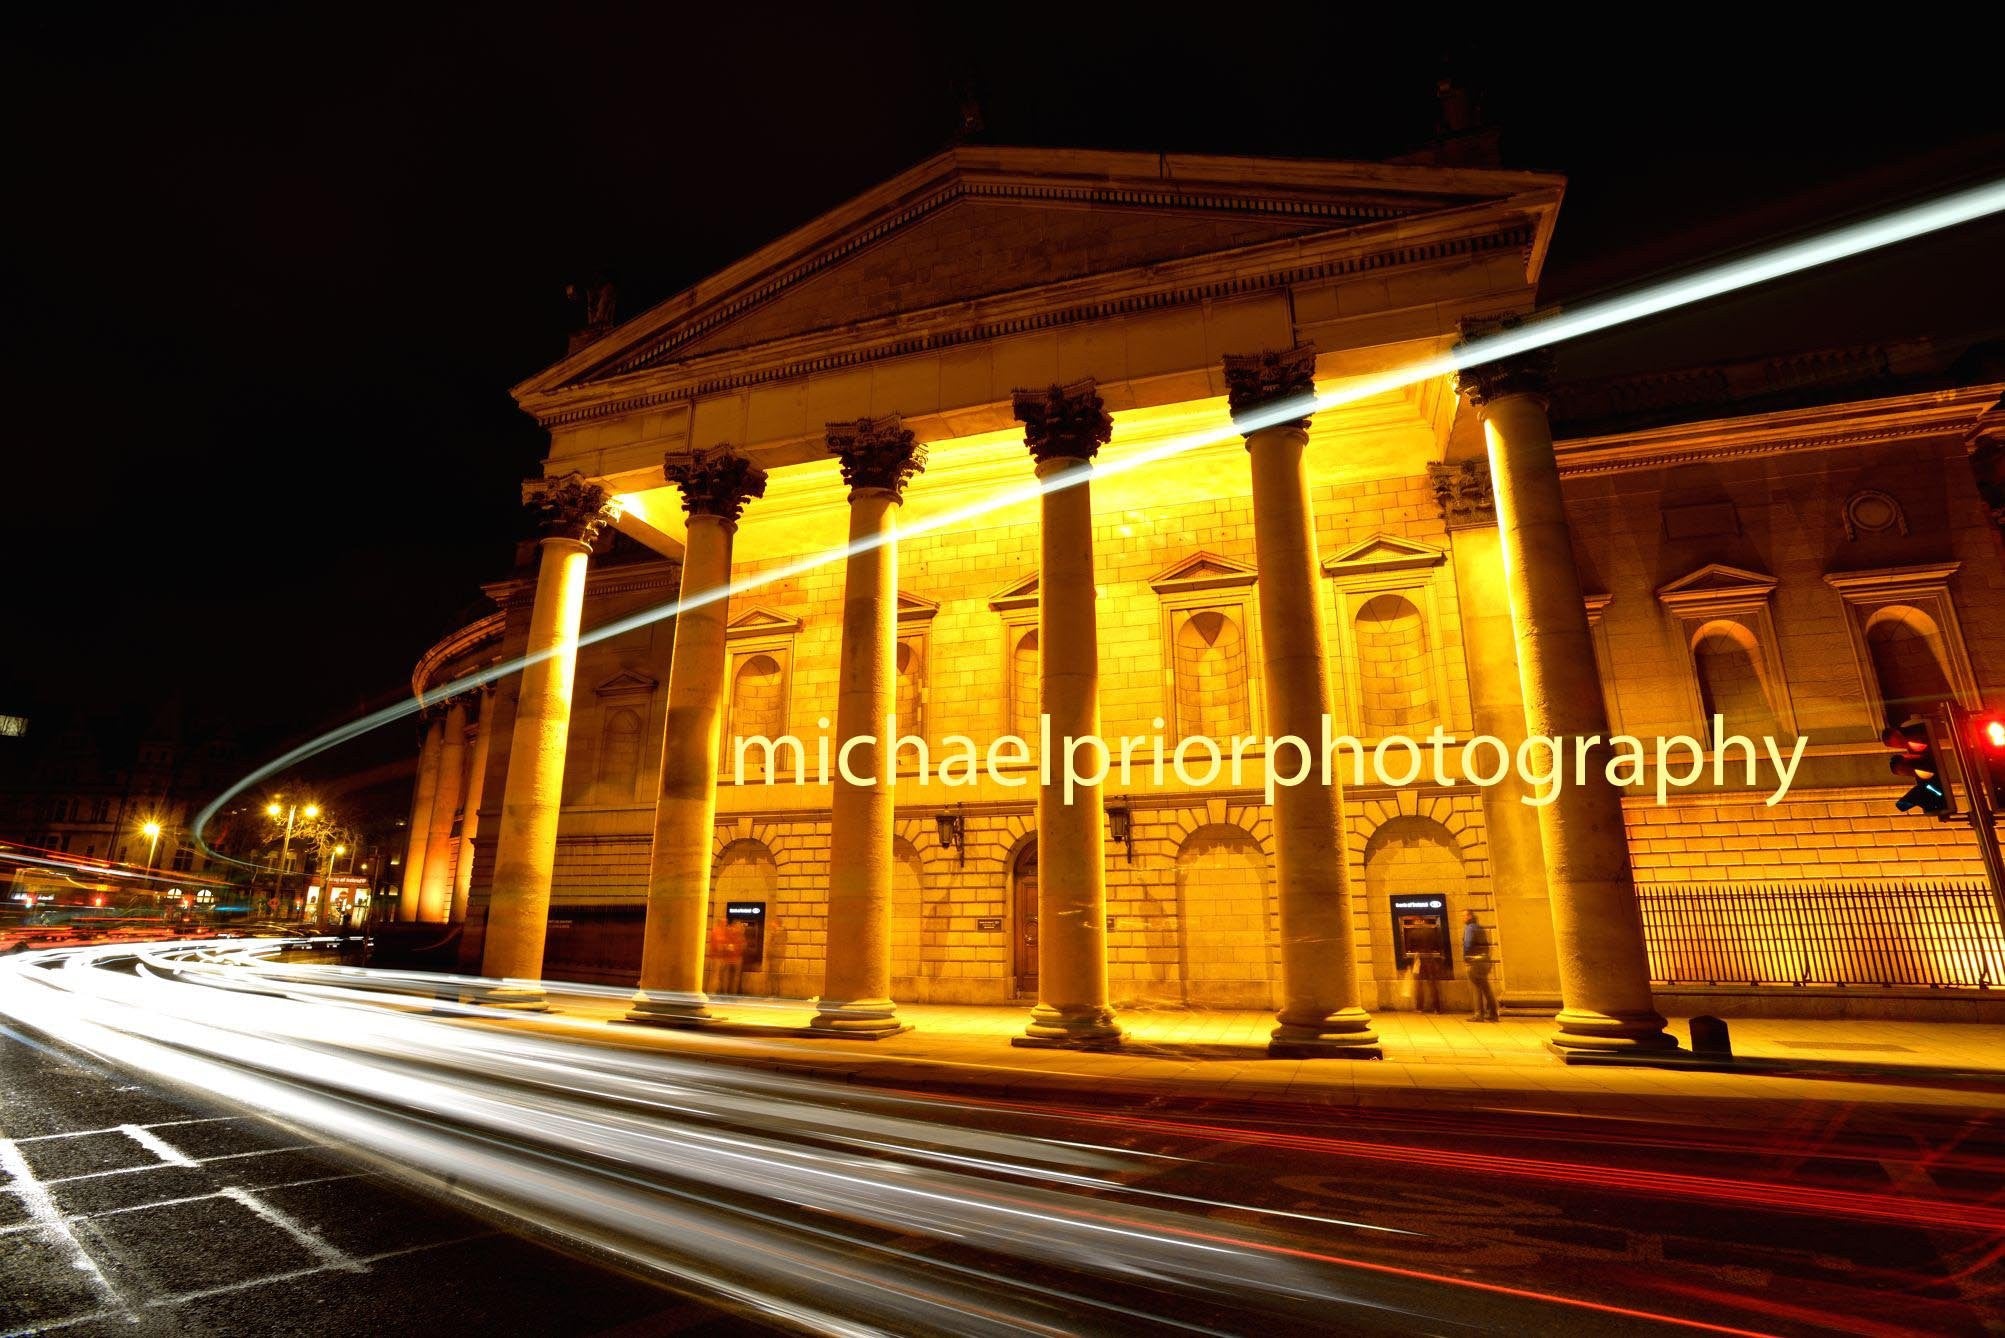 Bank Of Ireland Dublin - Michael Prior Photography 